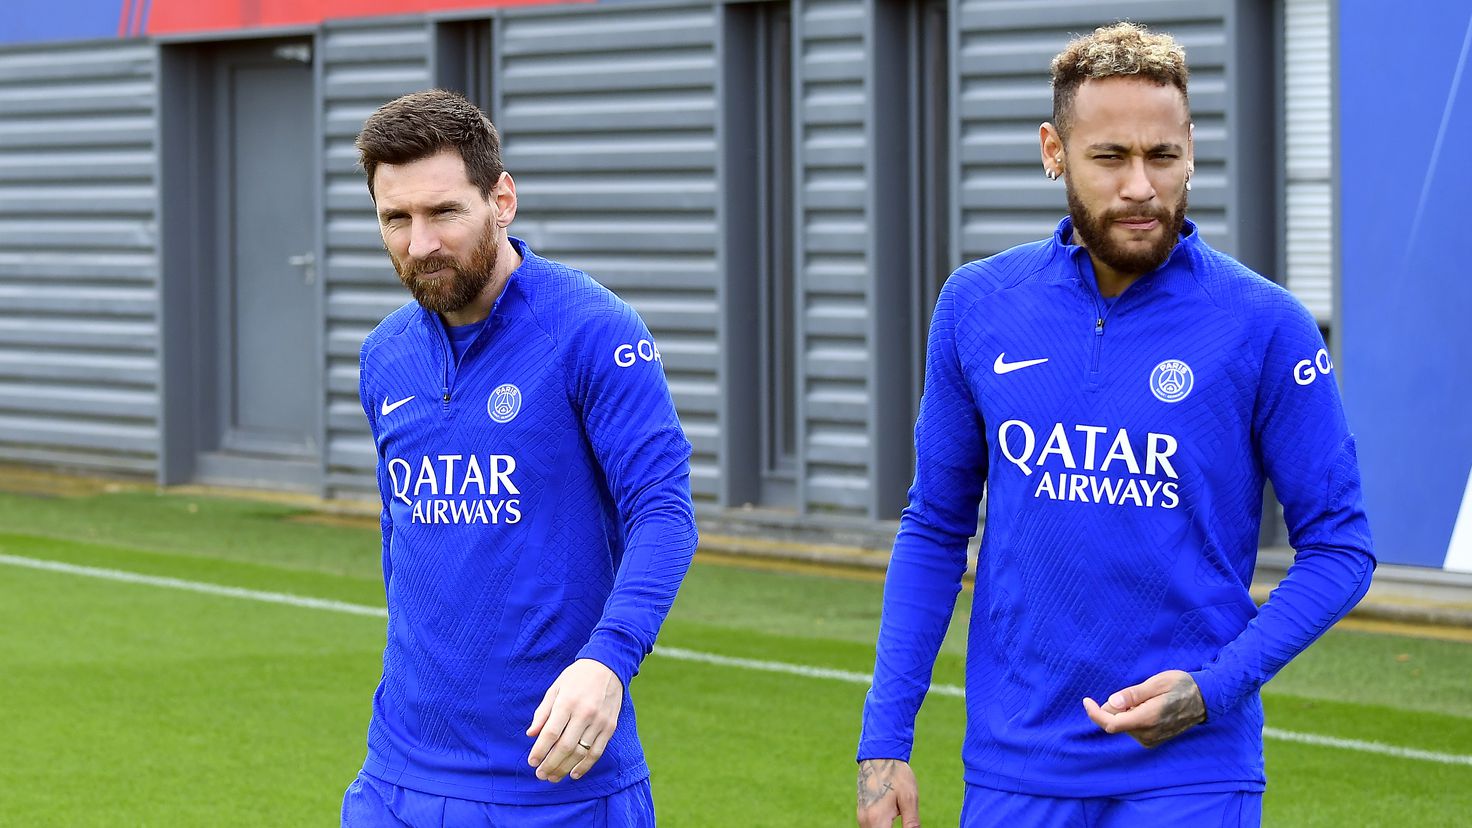 Neymar says goodbye to Messi
